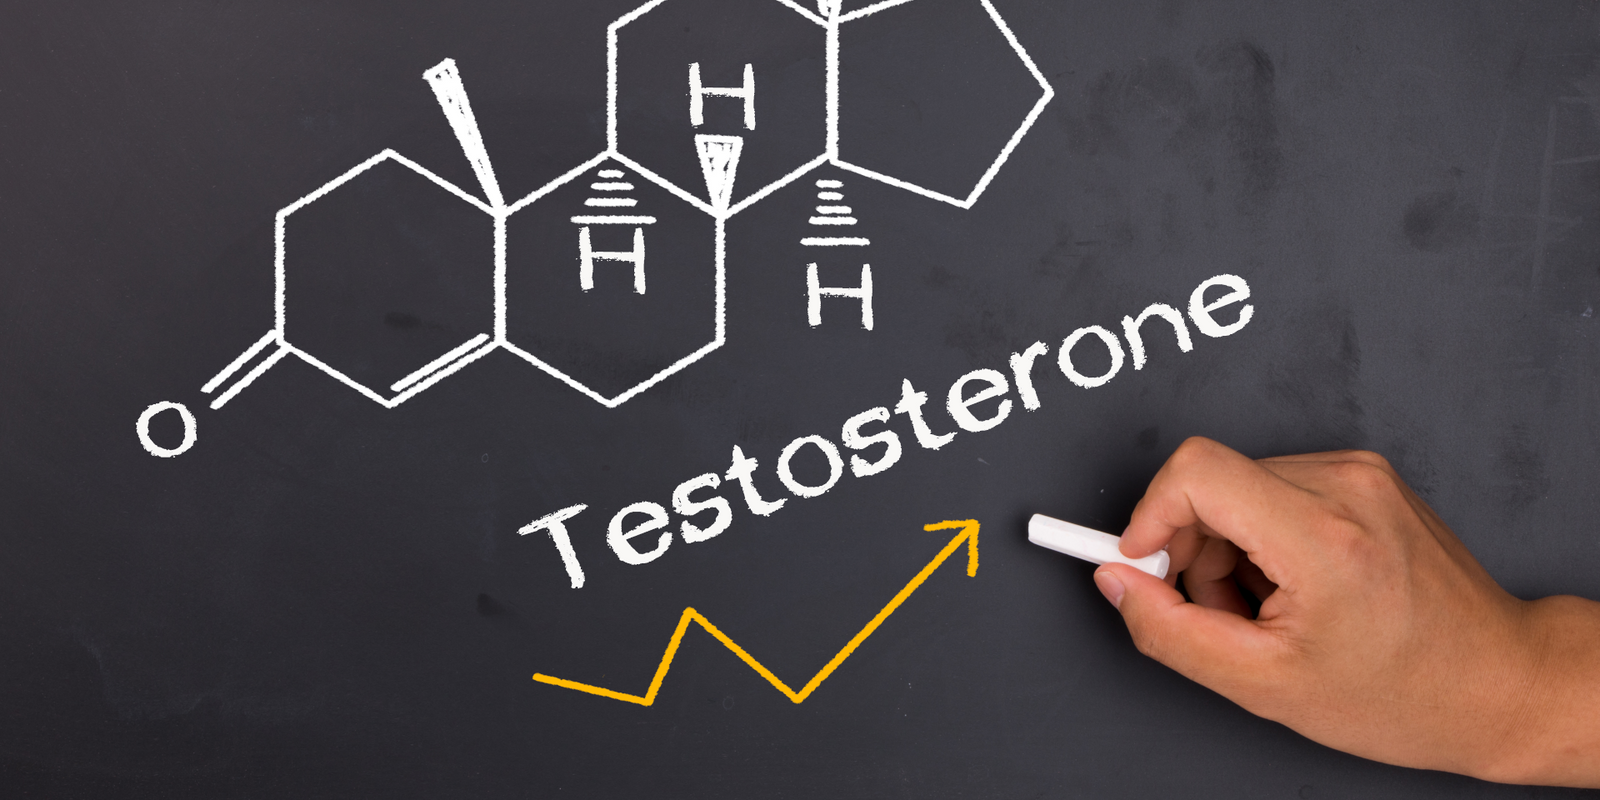 Ultimate testosterone guide